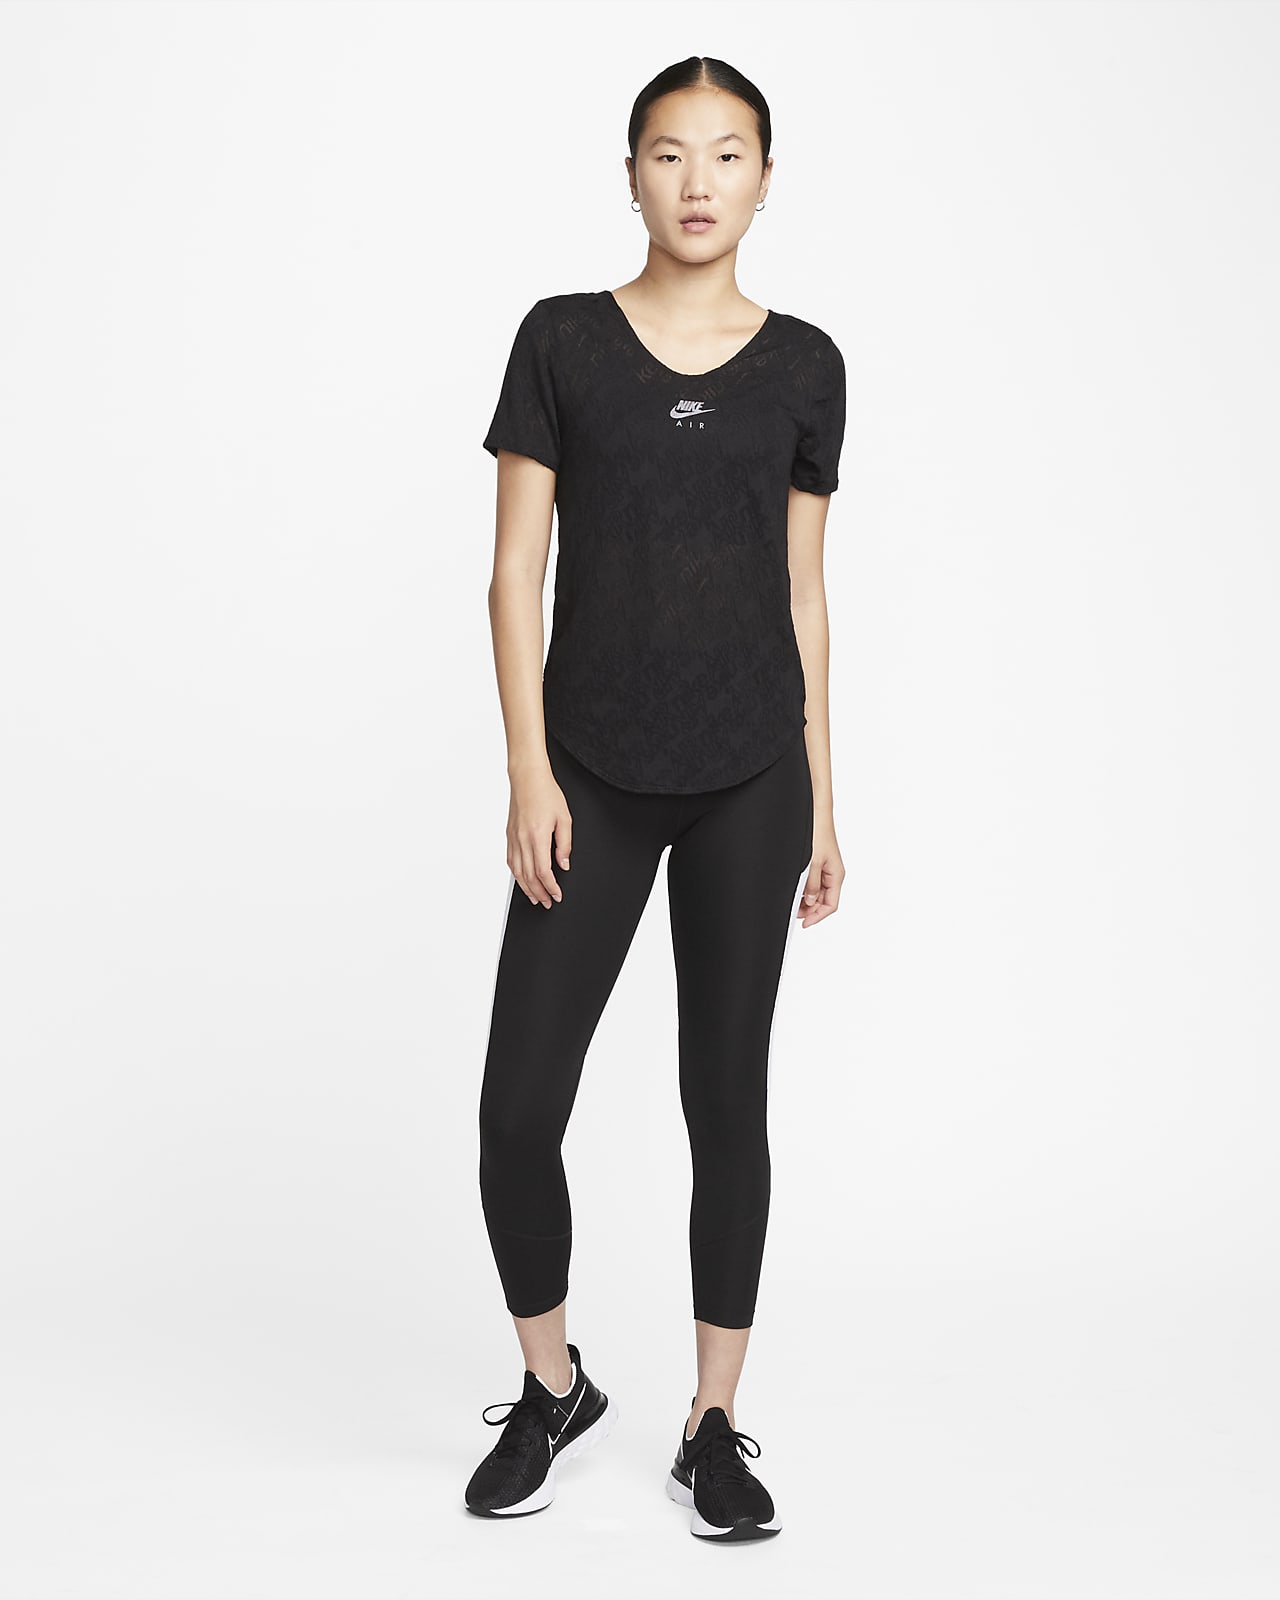 Buy Nike women sportswear fir short sleeve plain yoga top black